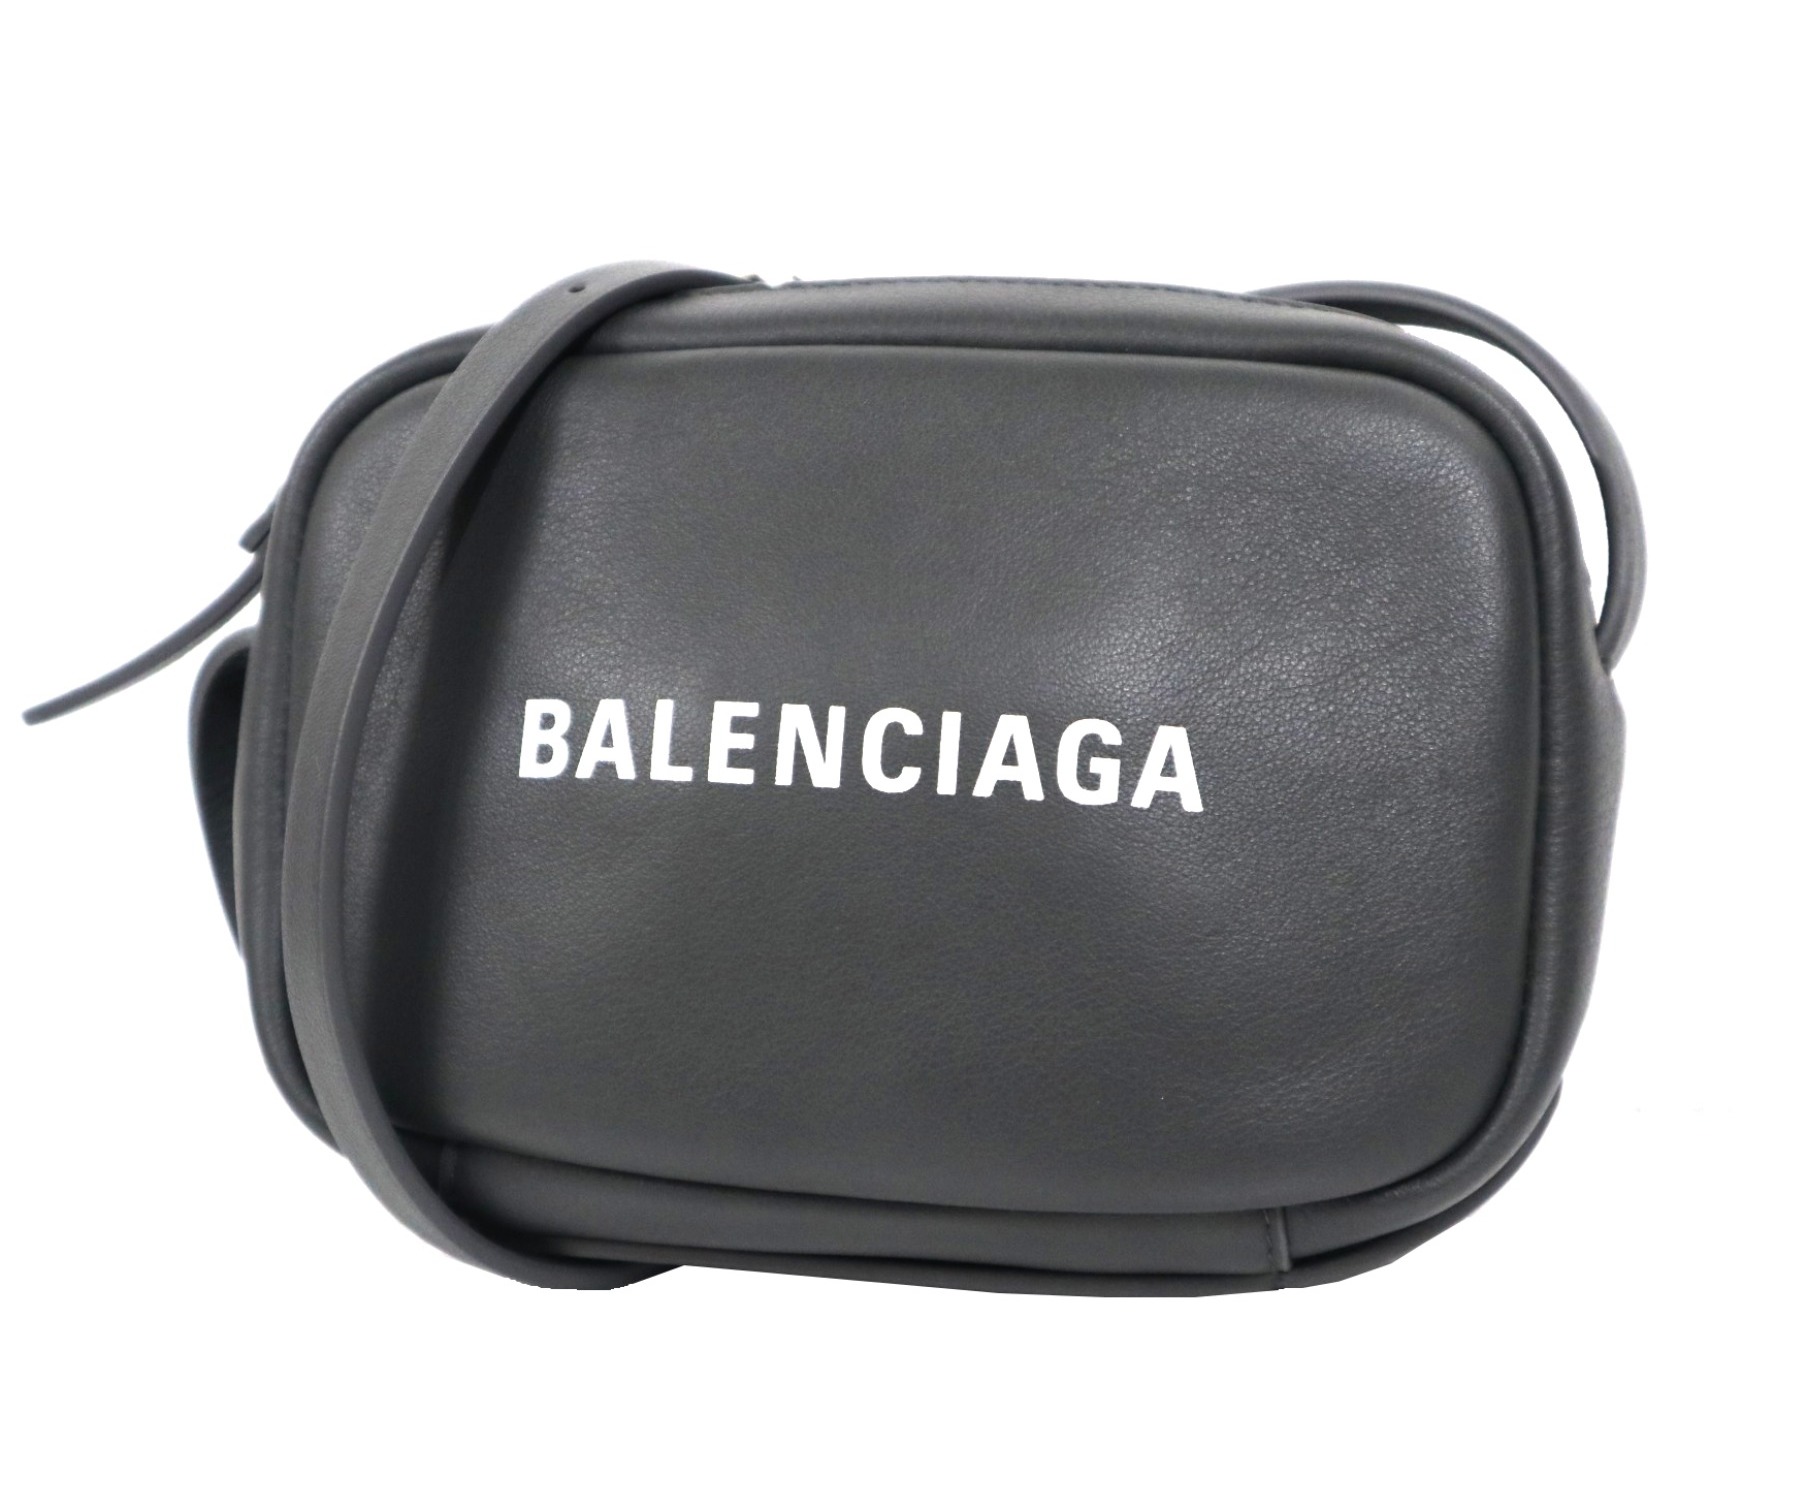 BALENCIAGA (バレンシアガ) エブリデイカメラバッグXSショルダーバッグ グレー EVERYDAY CAMERA BAG XS